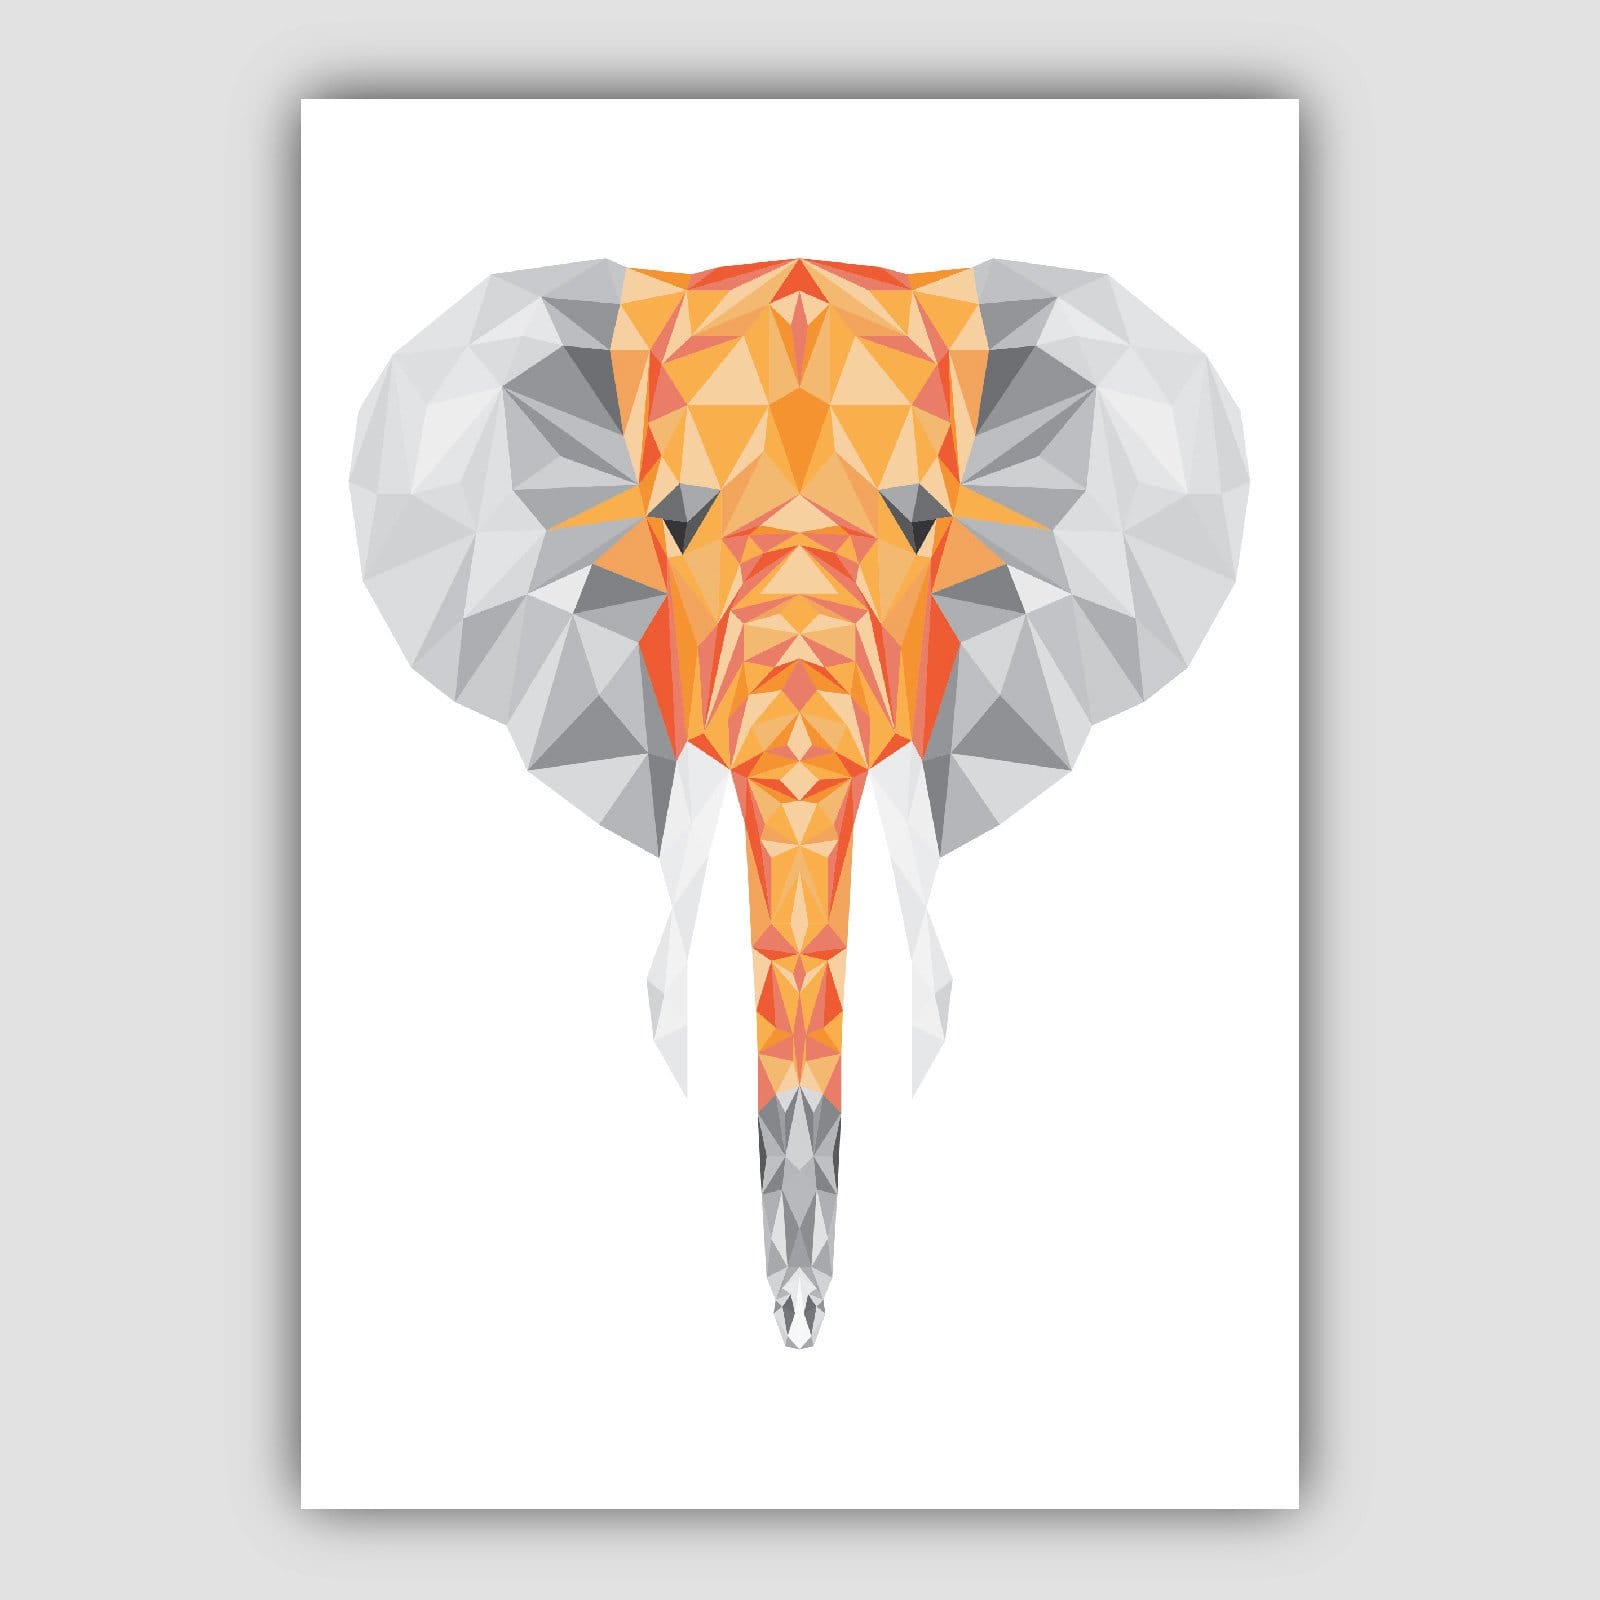 GEOMETRIC set of 3 ORANGE & Grey Art Prints Jungle Heads Giraffe Lion Elephant